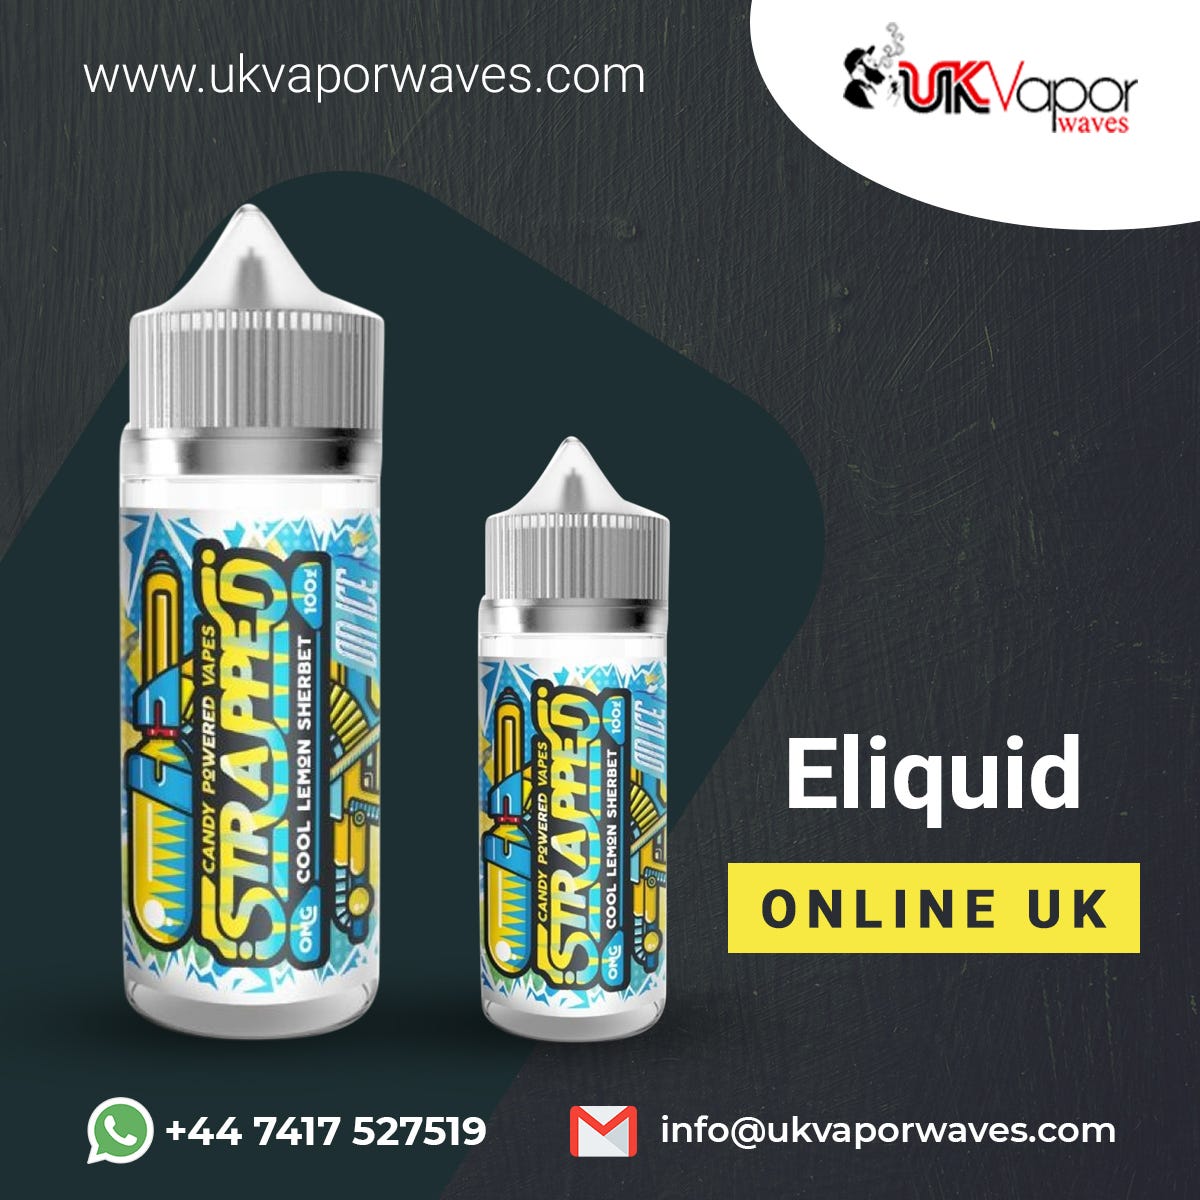 Where To Buy Eliquid And Why? - UK Vapor Waves - Medium